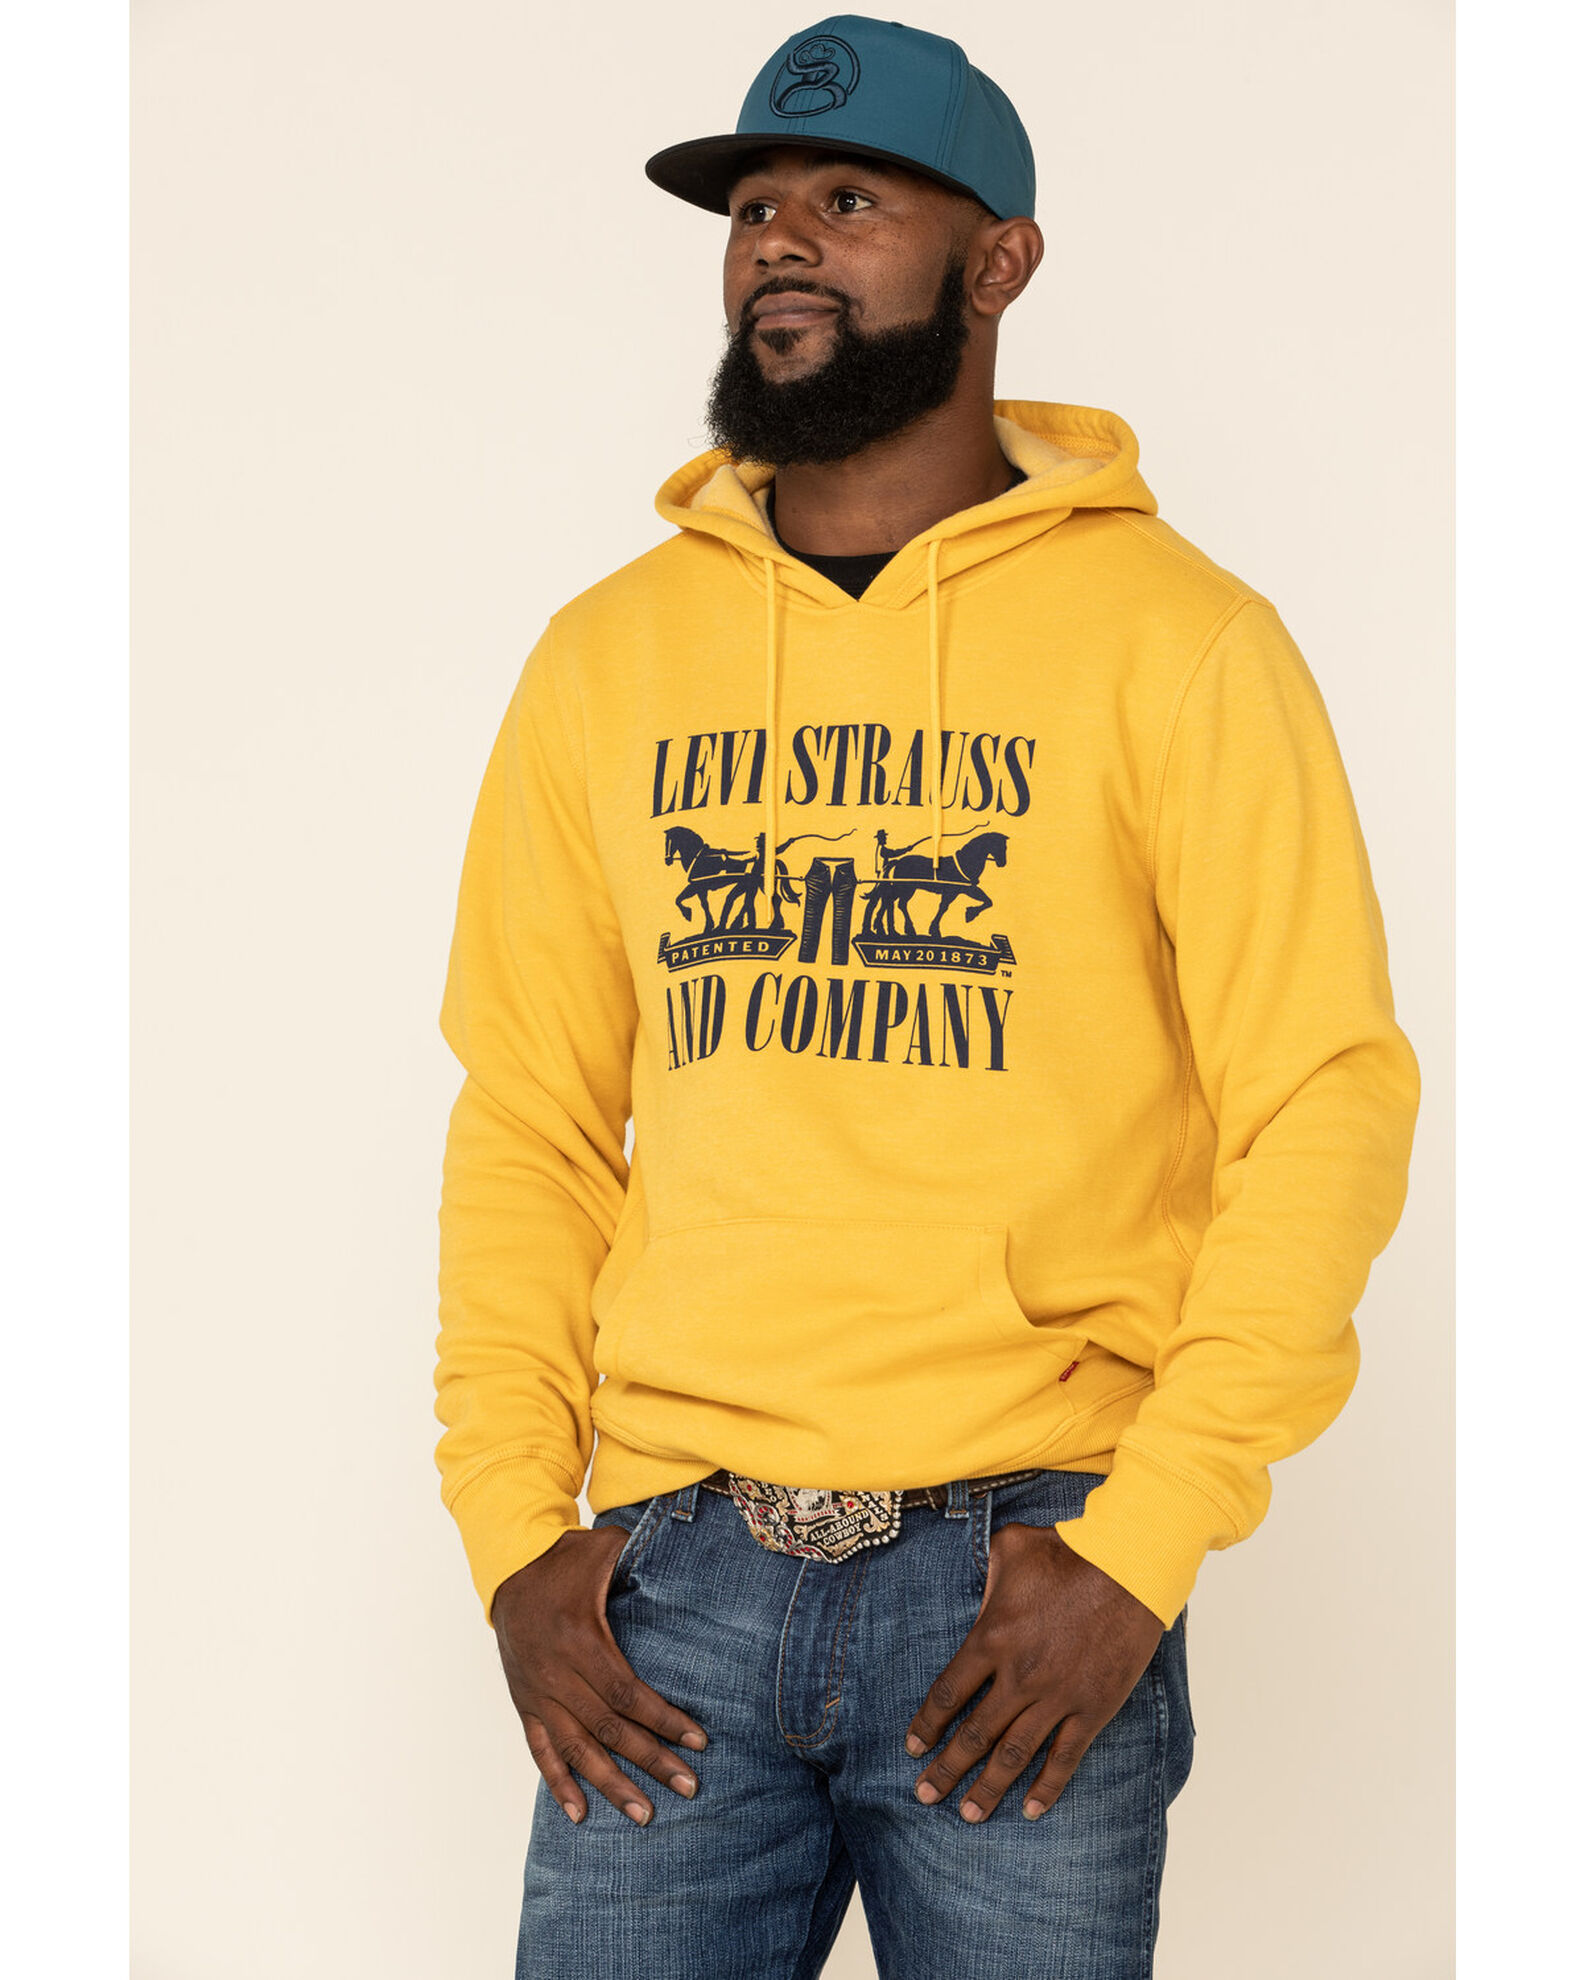 Levi's Men's Yolk Yellow Graphic Hooded Sweatshirt | Boot Barn